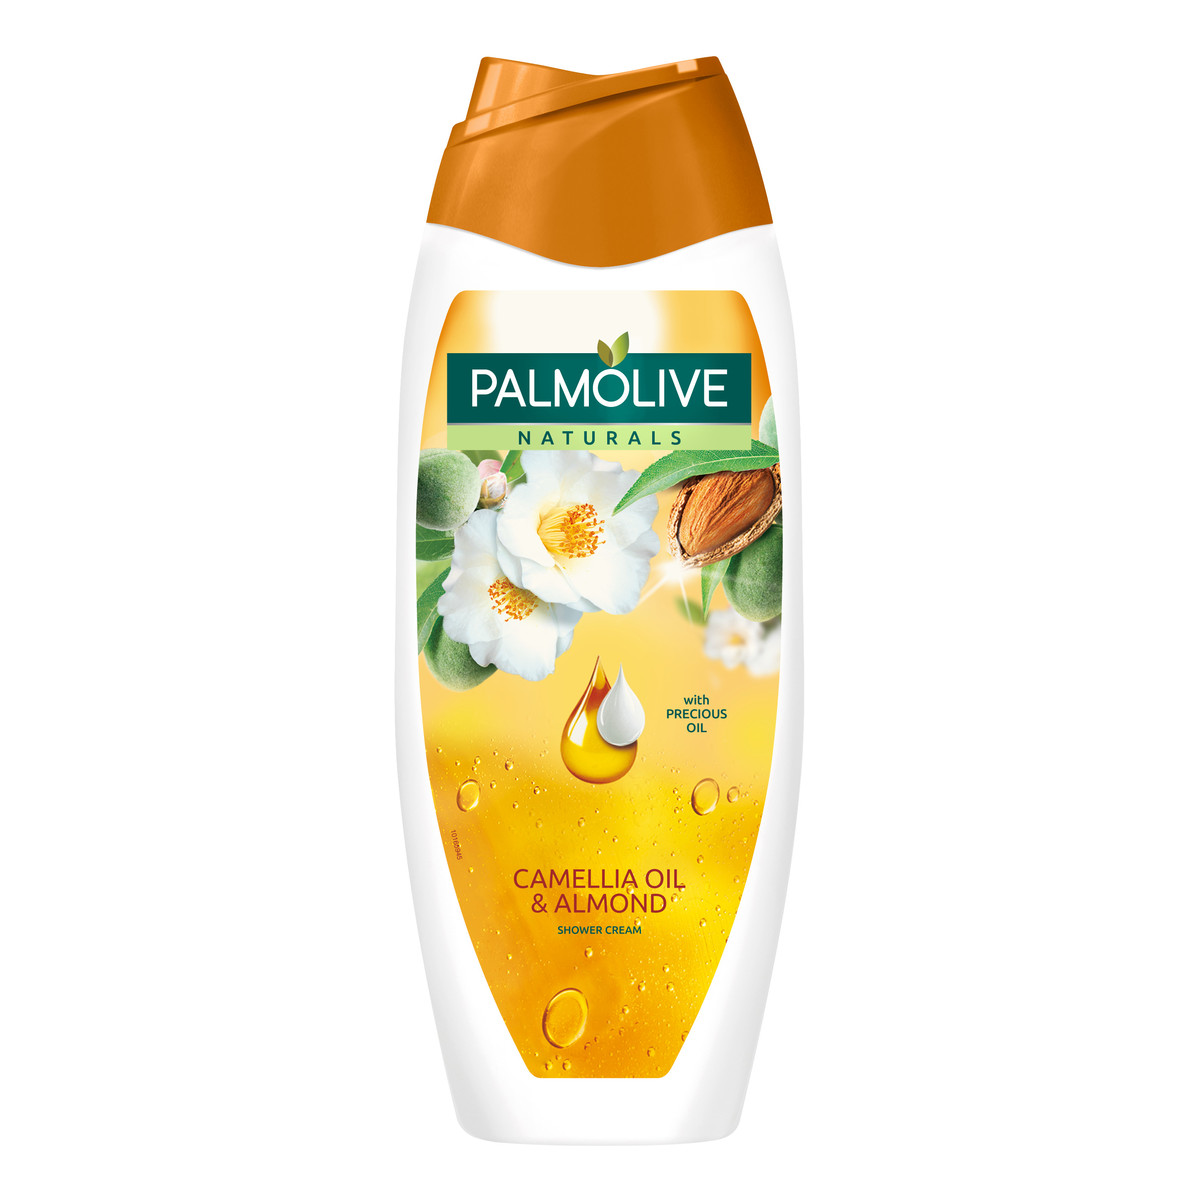 Palmolive Naturals kremowy żel pod prysznic Camellia Oil & Almond 500ml